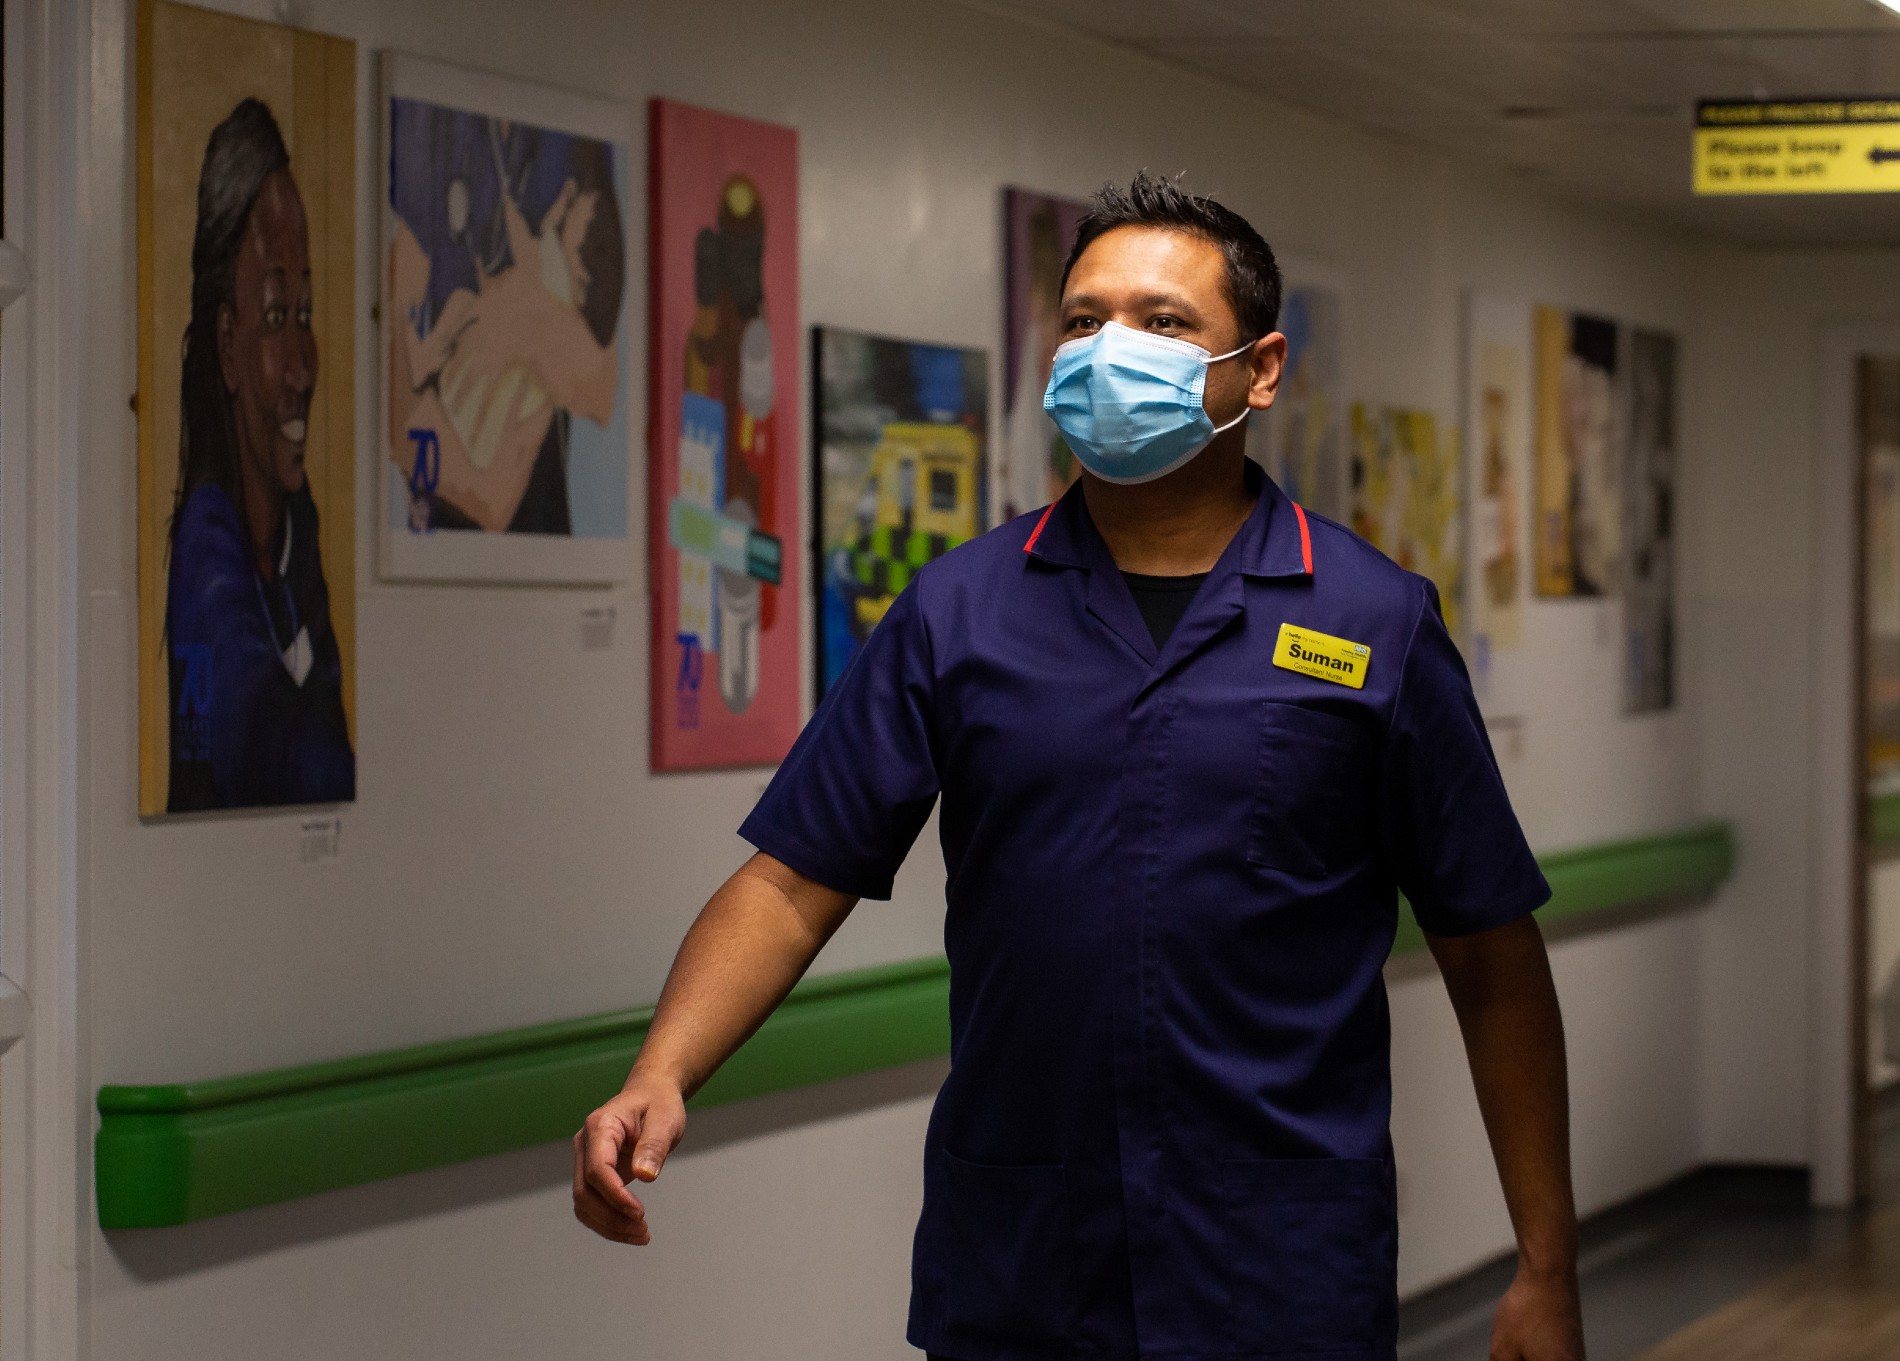 RCN Professional Lead for Critical Care Suman Shrestha strides down a corridor inside Frimley Hospital 